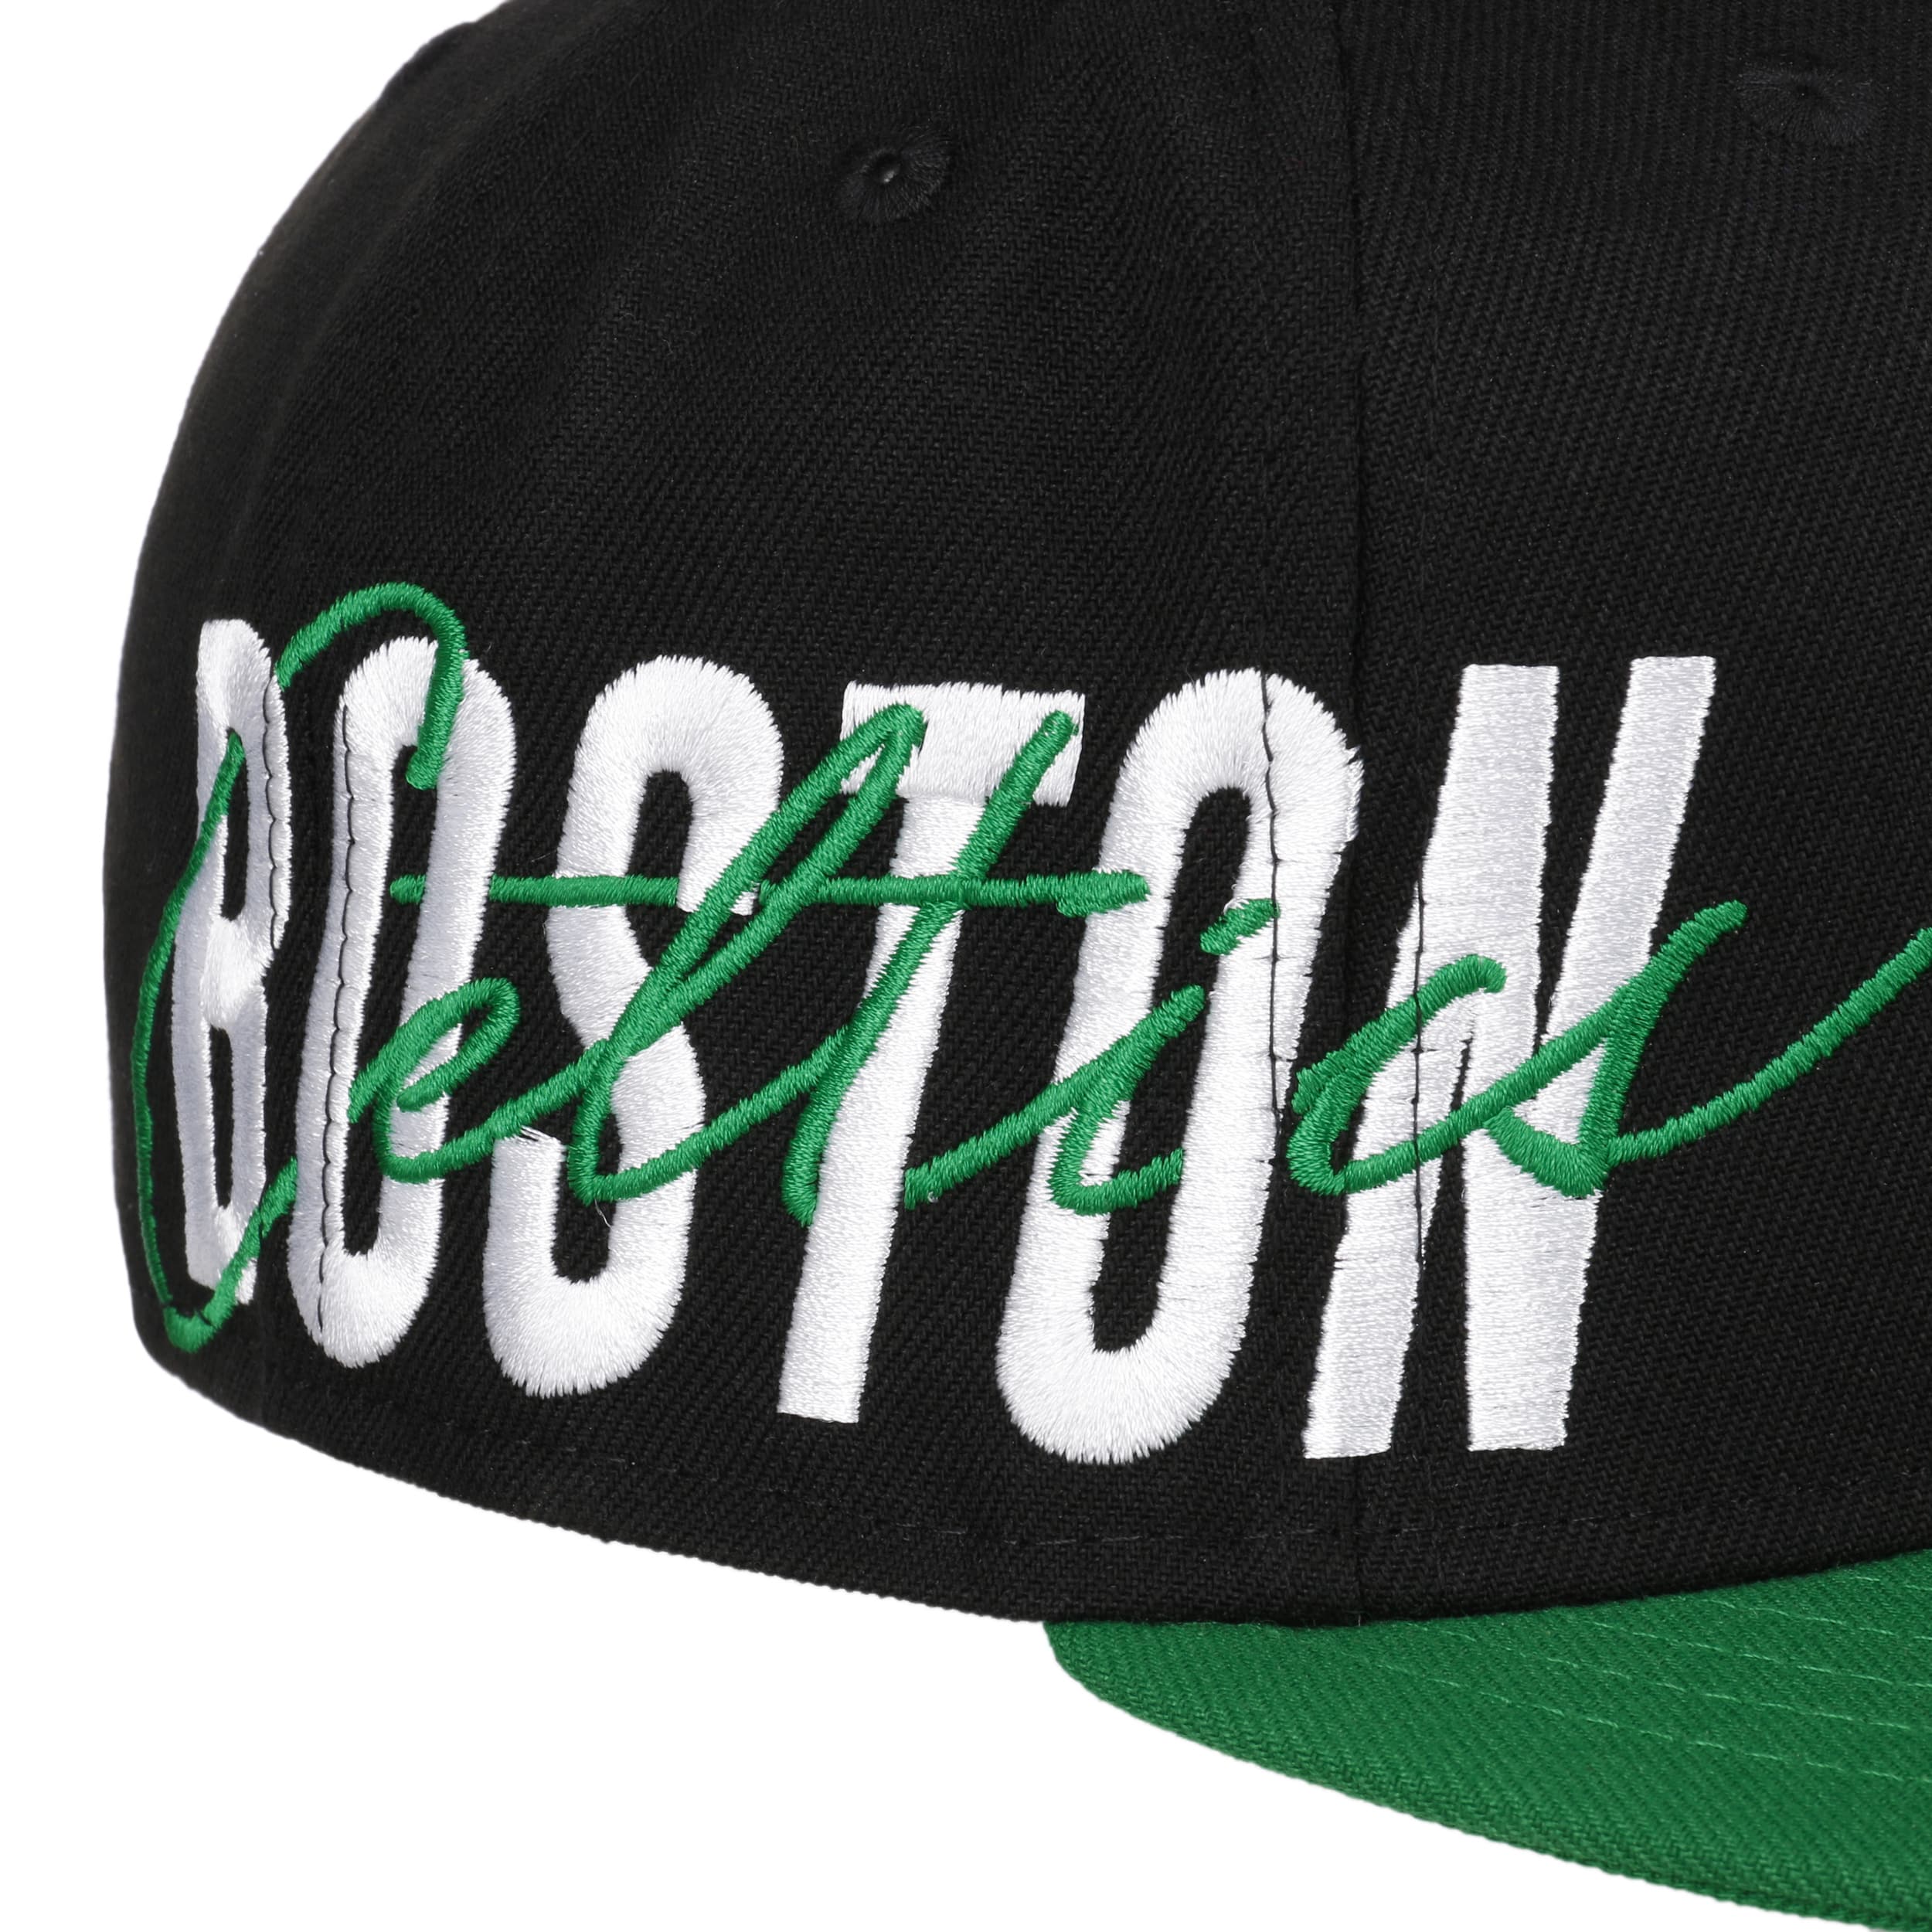 NEW ERA BOSTON CELTICS BASEBALL CAP COLOR GREEN BLACK